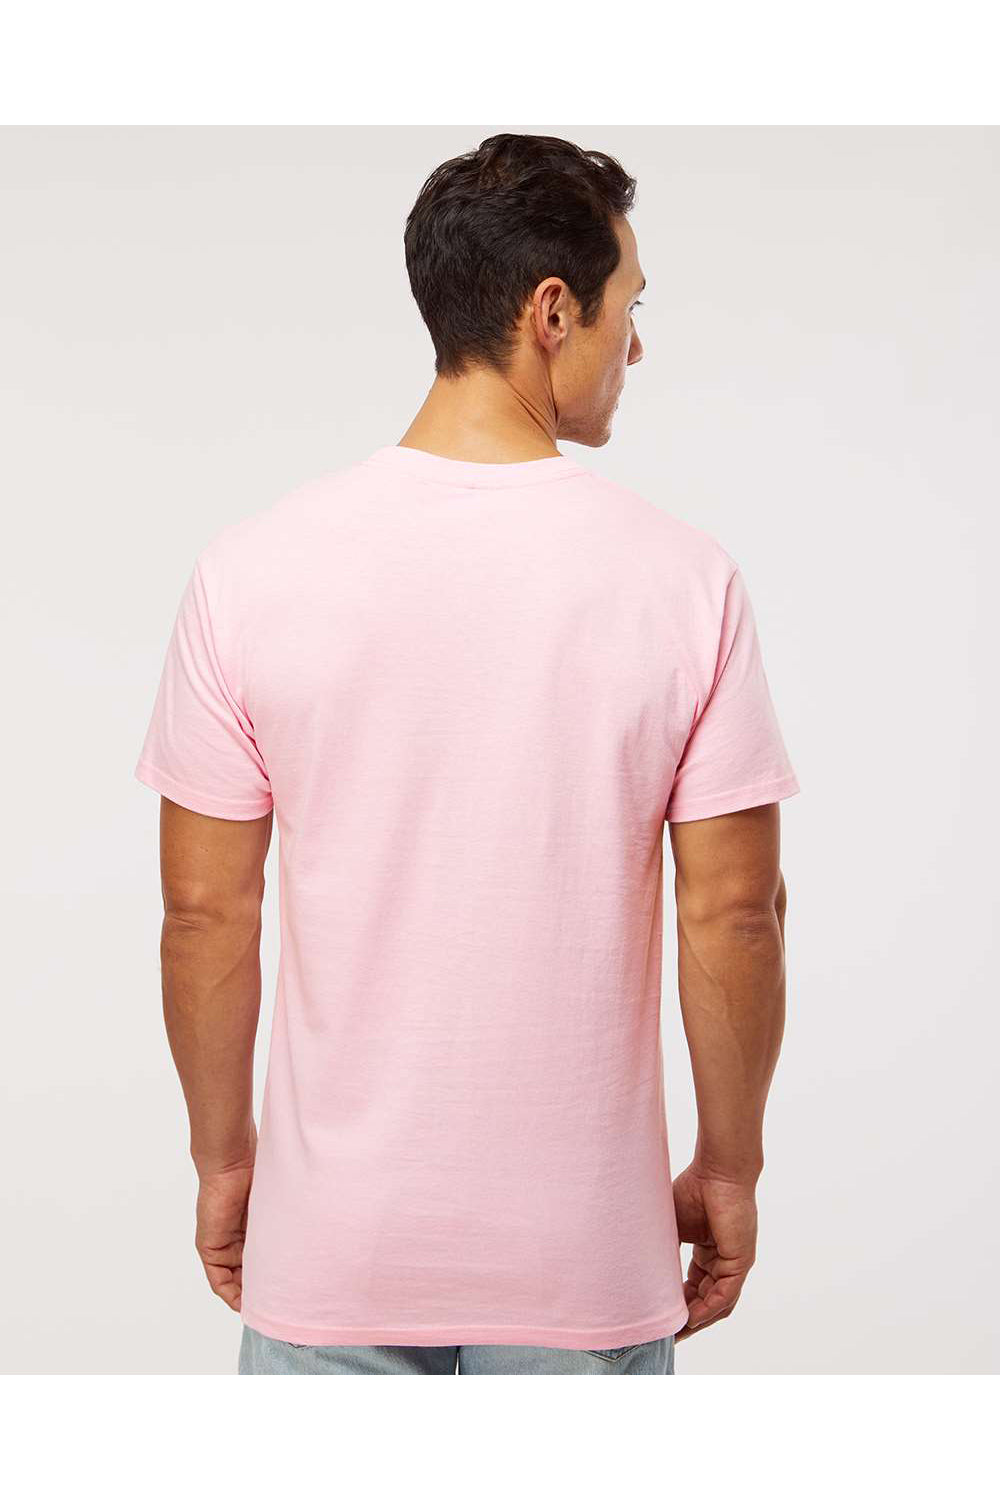 M&O 4800 Mens Gold Soft Touch Short Sleeve Crewneck T-Shirt Light Pink Model Back